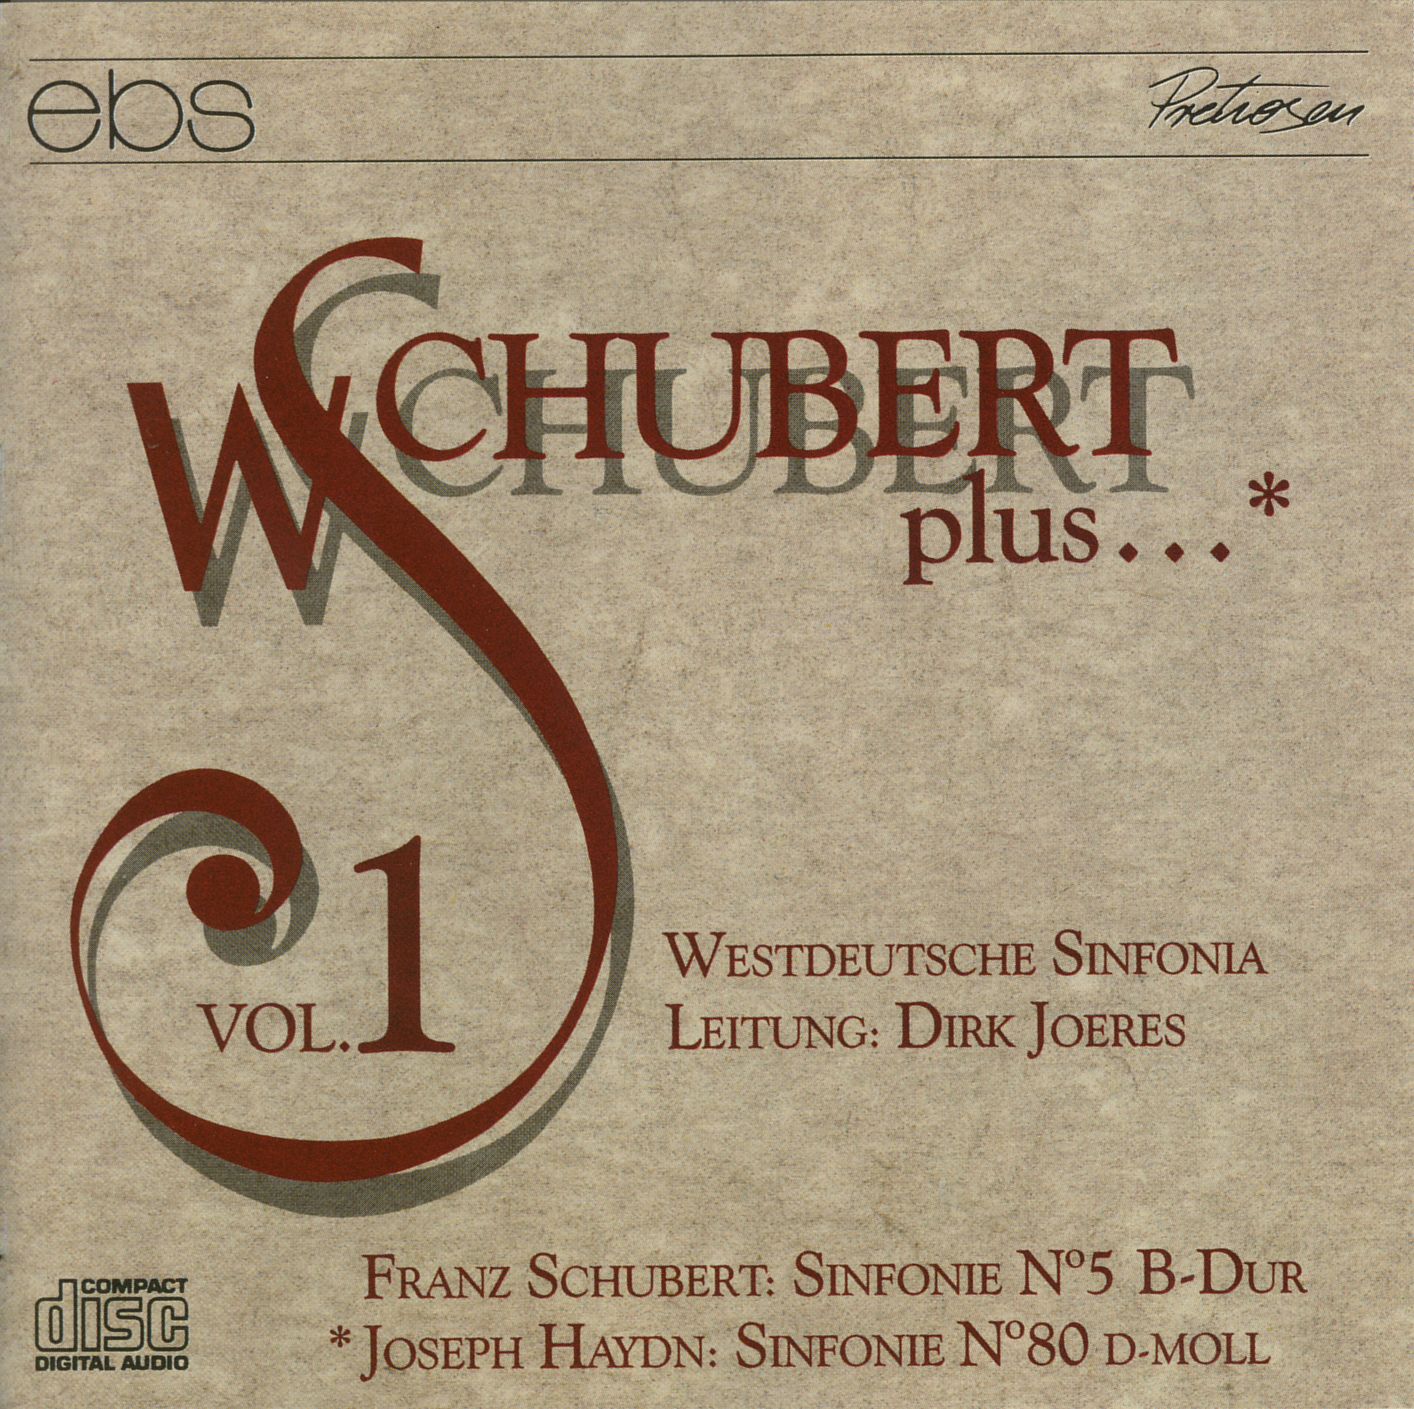 Schubert plus…. Vol.1